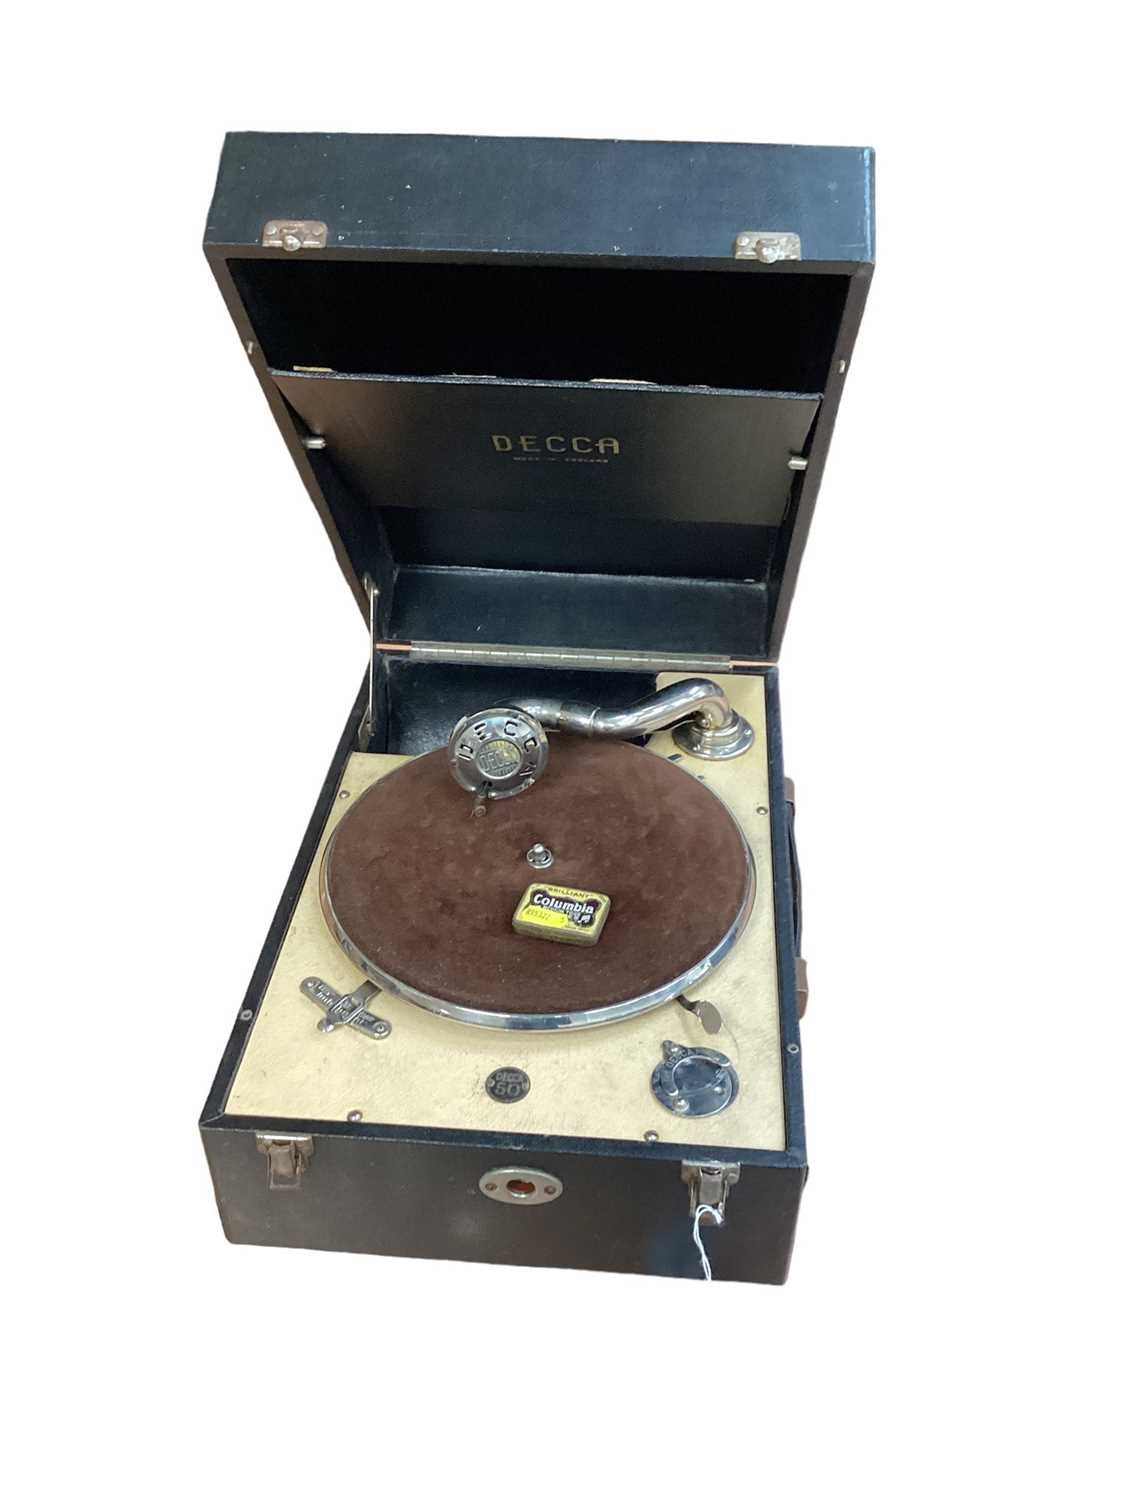 Decca 50 windup gramophone with original soundbox and Columbia needle tin plus a few 78s